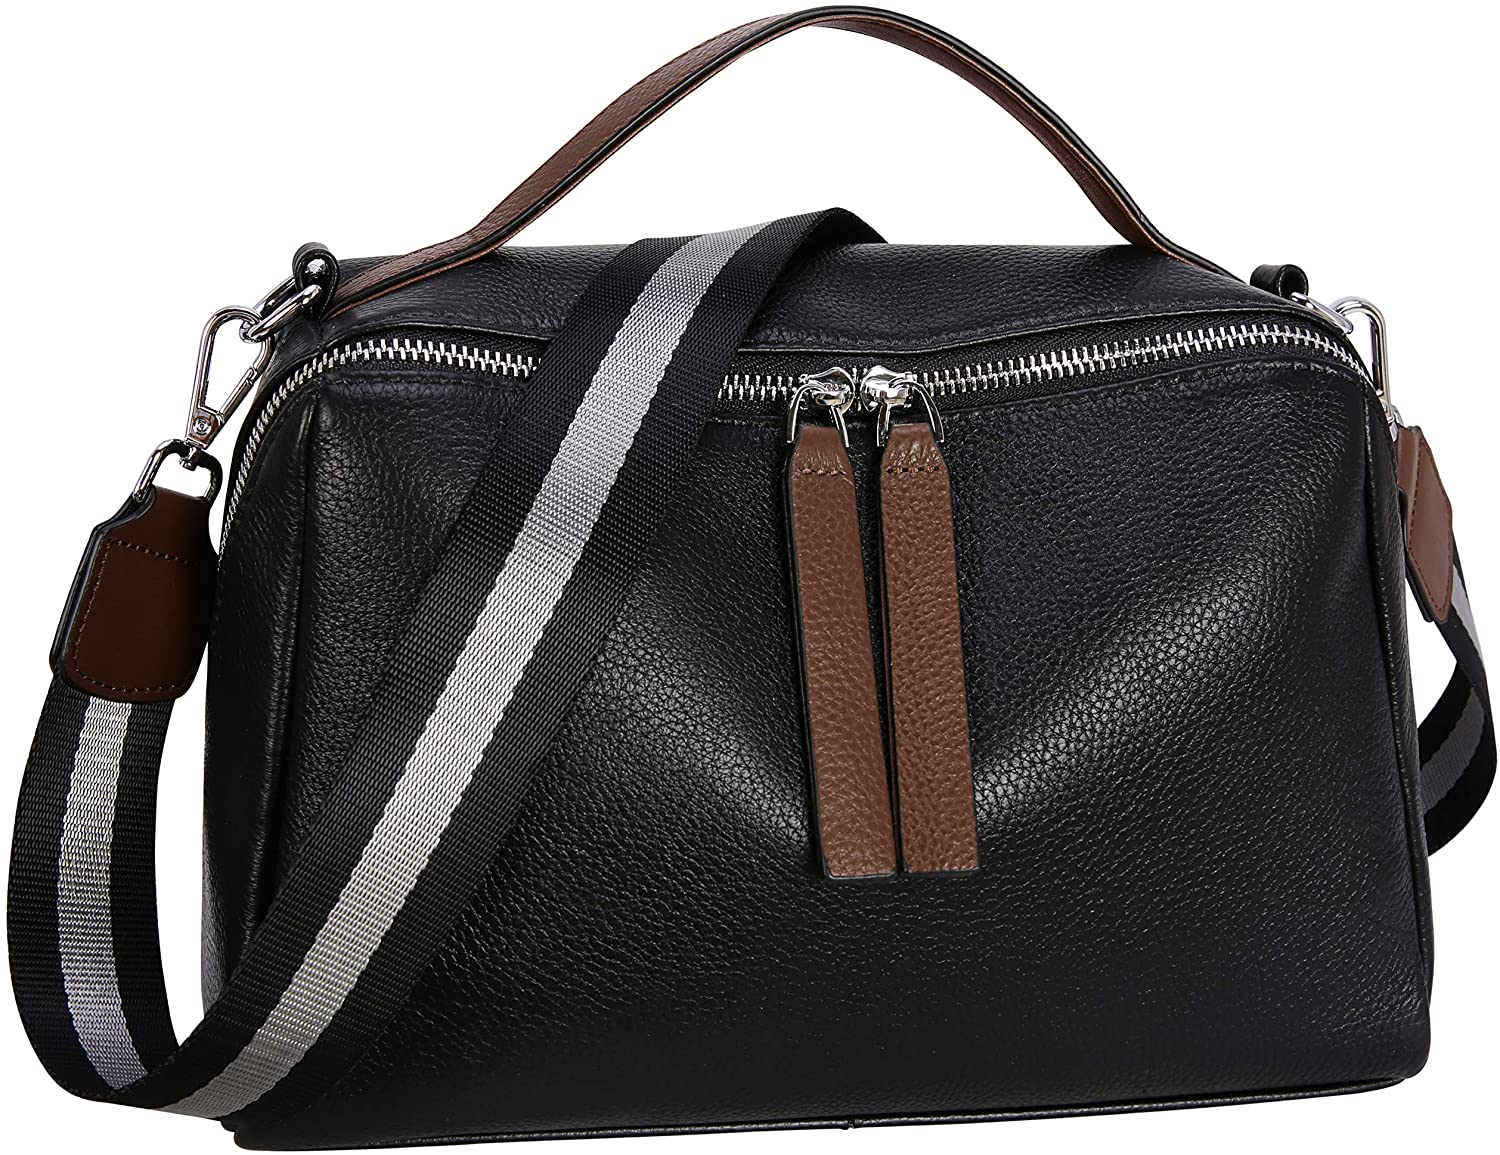 Price:$59.90    Iswee Fashion Women Tote Handbag Satchel Shoulder Bag Cross Body Shopping Bags Ladies Purse Genuine Leather (Black)  Clothing